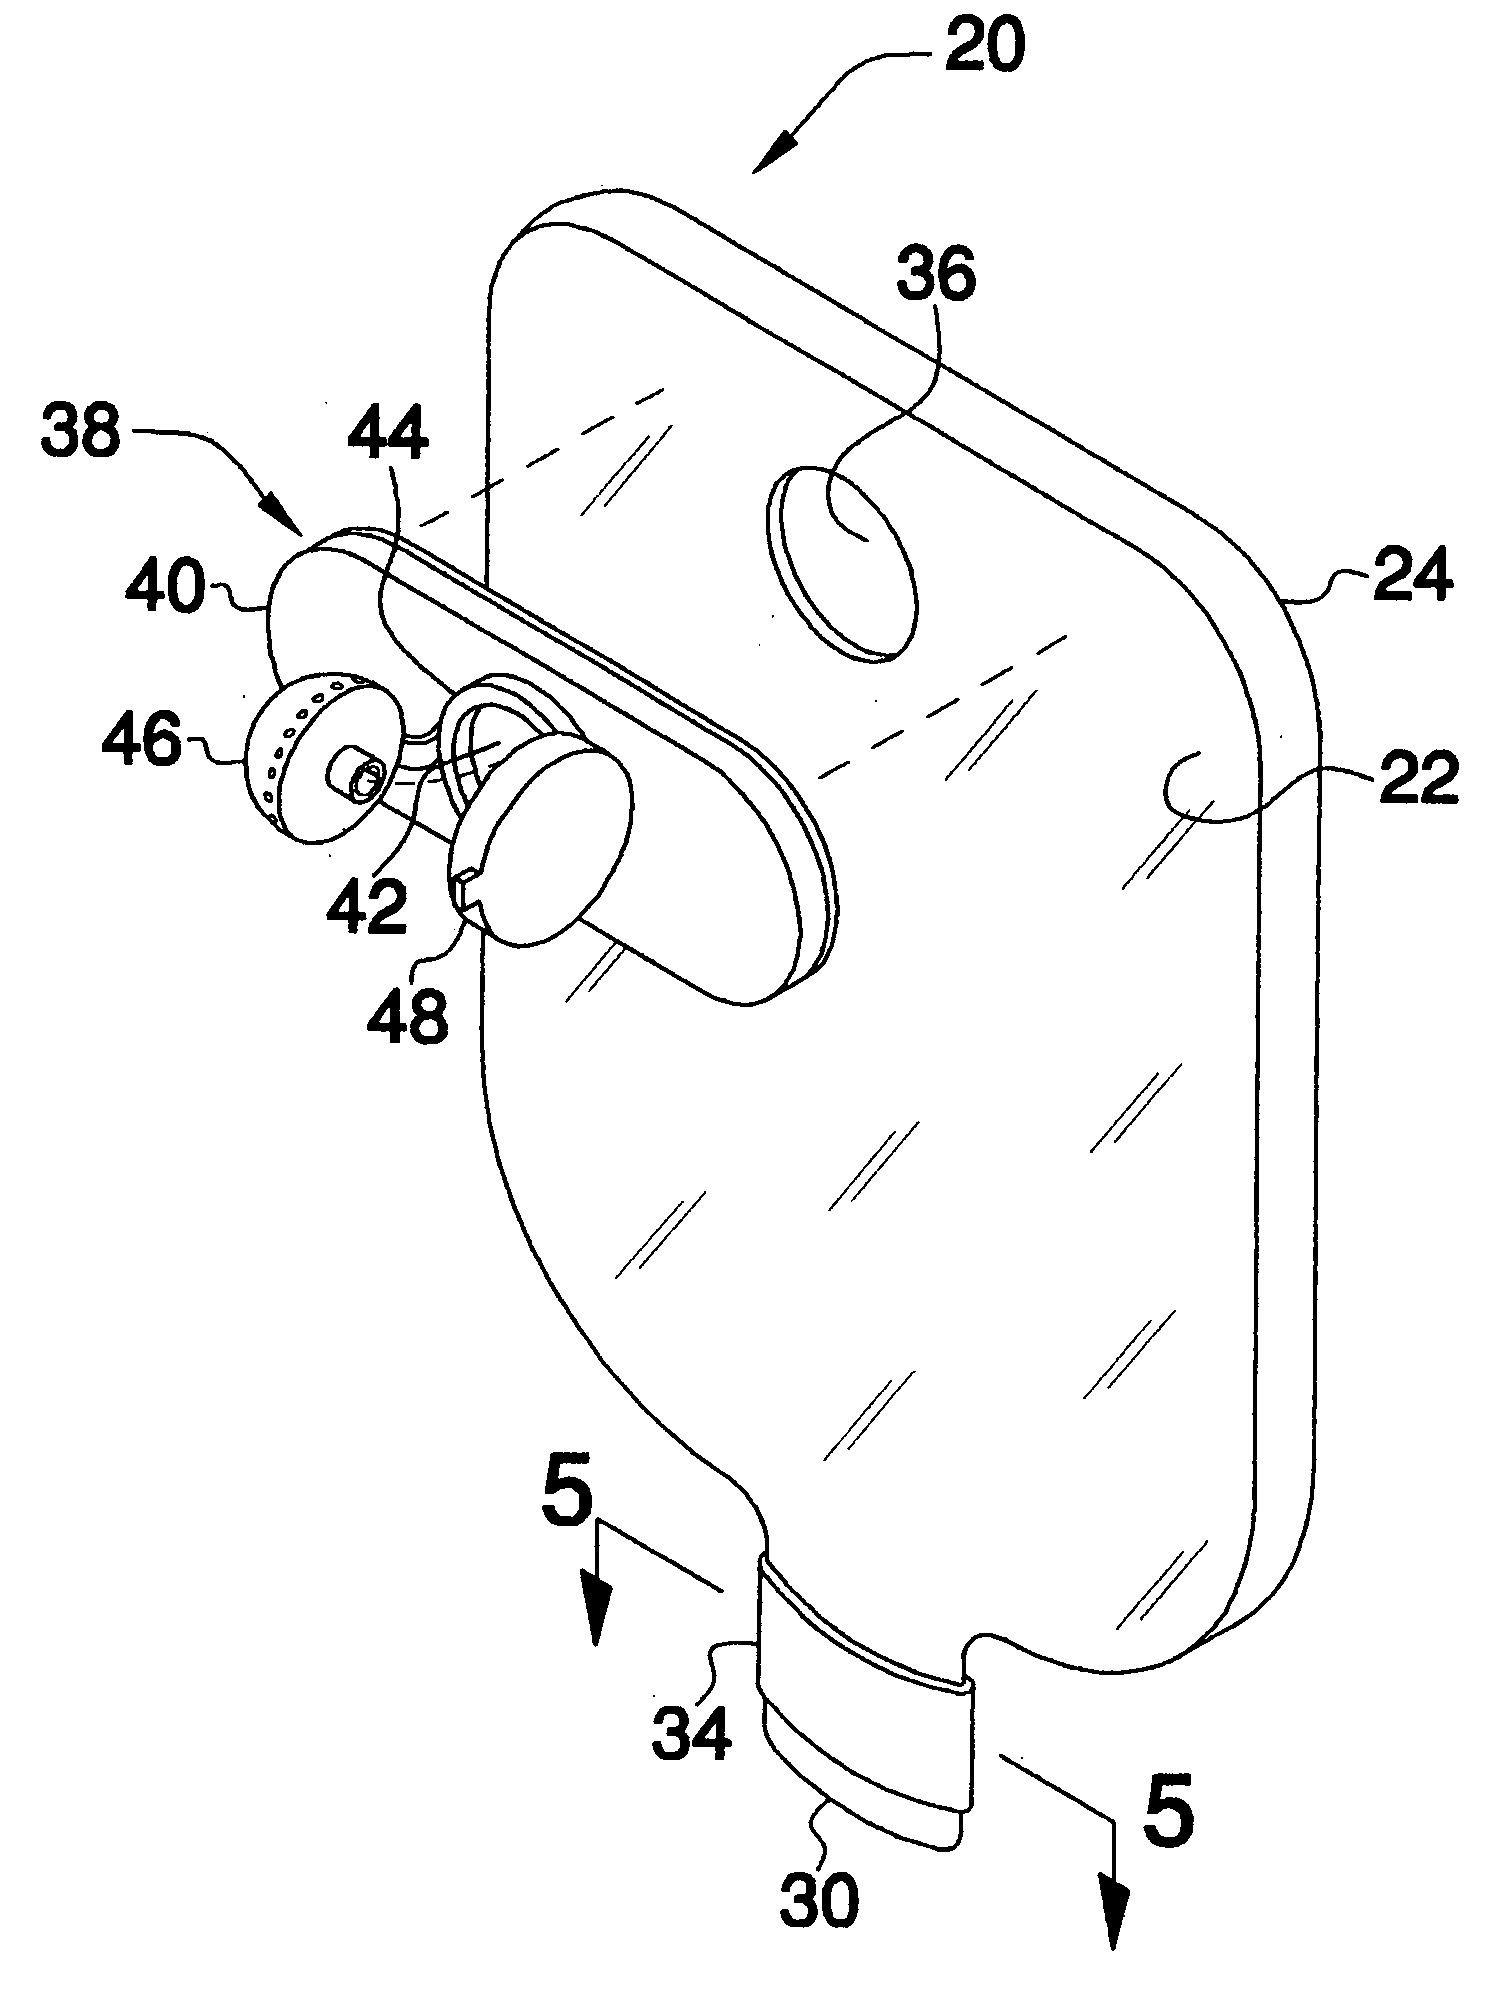 Colostomy bag and method of use